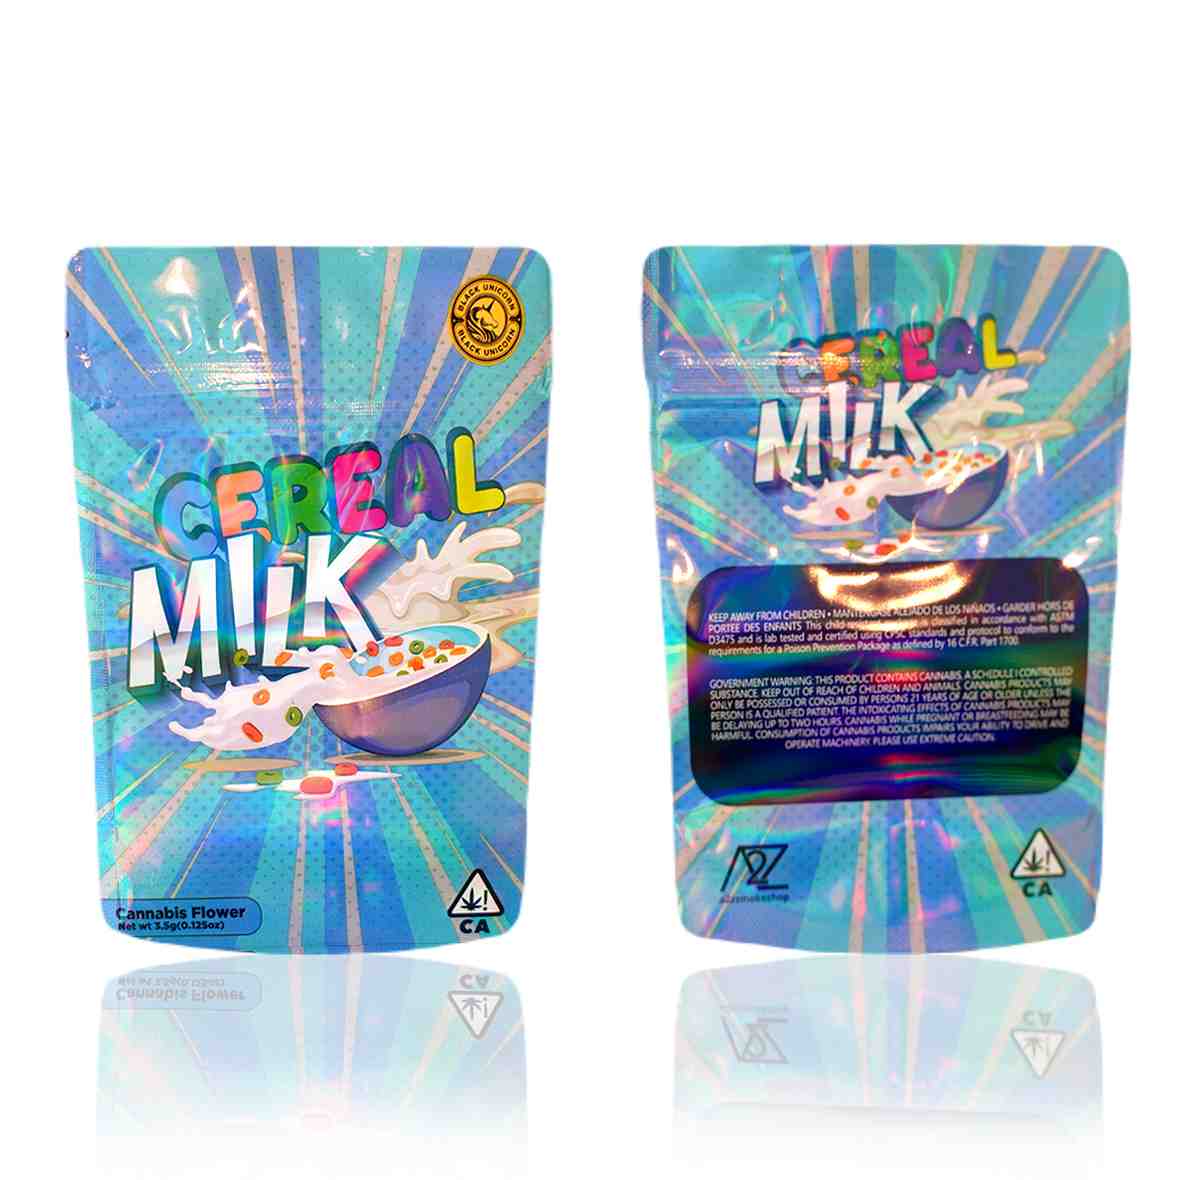 Cereal Milk compressed